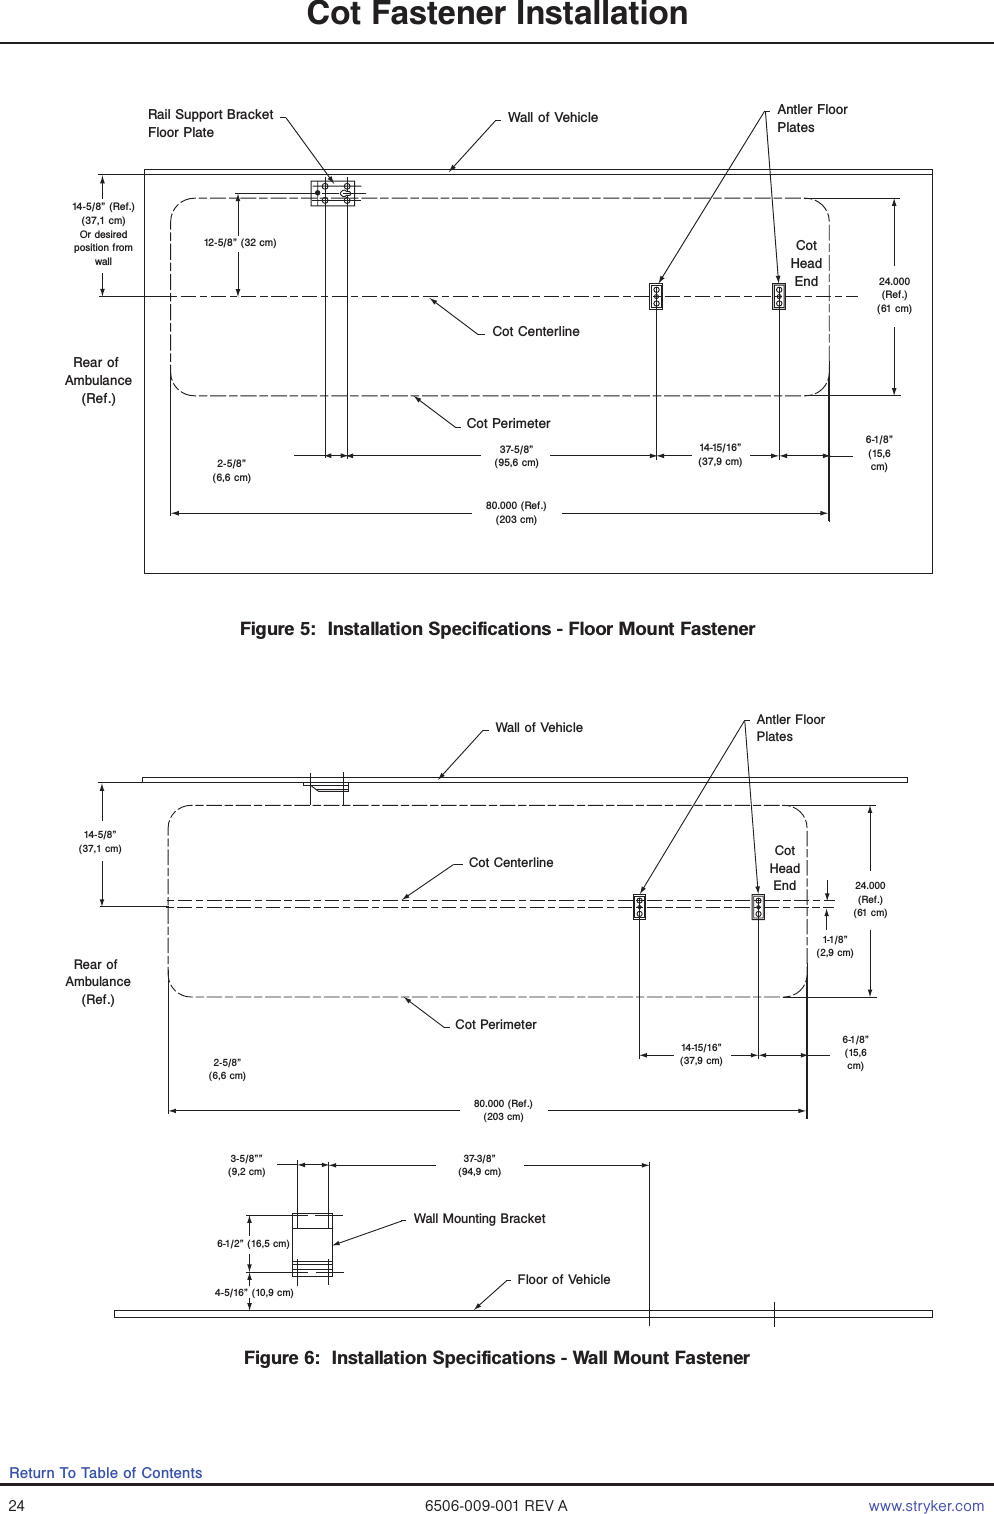 24 6506-009-001 REV A www.stryker.comReturn To Table of ContentsFigure 5:  Installation Specifications - Floor Mount FastenerFigure 6:  Installation Specifications - Wall Mount FastenerCot Fastener InstallationWall of Vehicle Antler Floor PlatesCot CenterlineCot Perimeter24.000(Ref.)(61 cm)6-1/8”(15,6 cm)14-15/16”(37,9 cm)80.000 (Ref.)(203 cm)2-5/8”(6,6 cm)CotHeadEnd14-5/8”(37,1 cm)Rear of Ambulance(Ref.)1-1/8”(2,9 cm)3-5/8””(9,2 cm)Wall Mounting BracketFloor of Vehicle37-3/8”(94,9 cm)6-1/2” (16,5 cm)4-5/16” (10,9 cm)Wall of VehicleRail Support Bracket Floor Plate Antler Floor PlatesCot CenterlineCot Perimeter12-5/8” (32 cm)24.000(Ref.)(61 cm)6-1/8”(15,6 cm)14-15/16”(37,9 cm)37-5/8”(95,6 cm)80.000 (Ref.)(203 cm)2-5/8”(6,6 cm)CotHeadEnd14-5/8” (Ref.)(37,1 cm)Or desired position fromwallRear of Ambulance(Ref.)